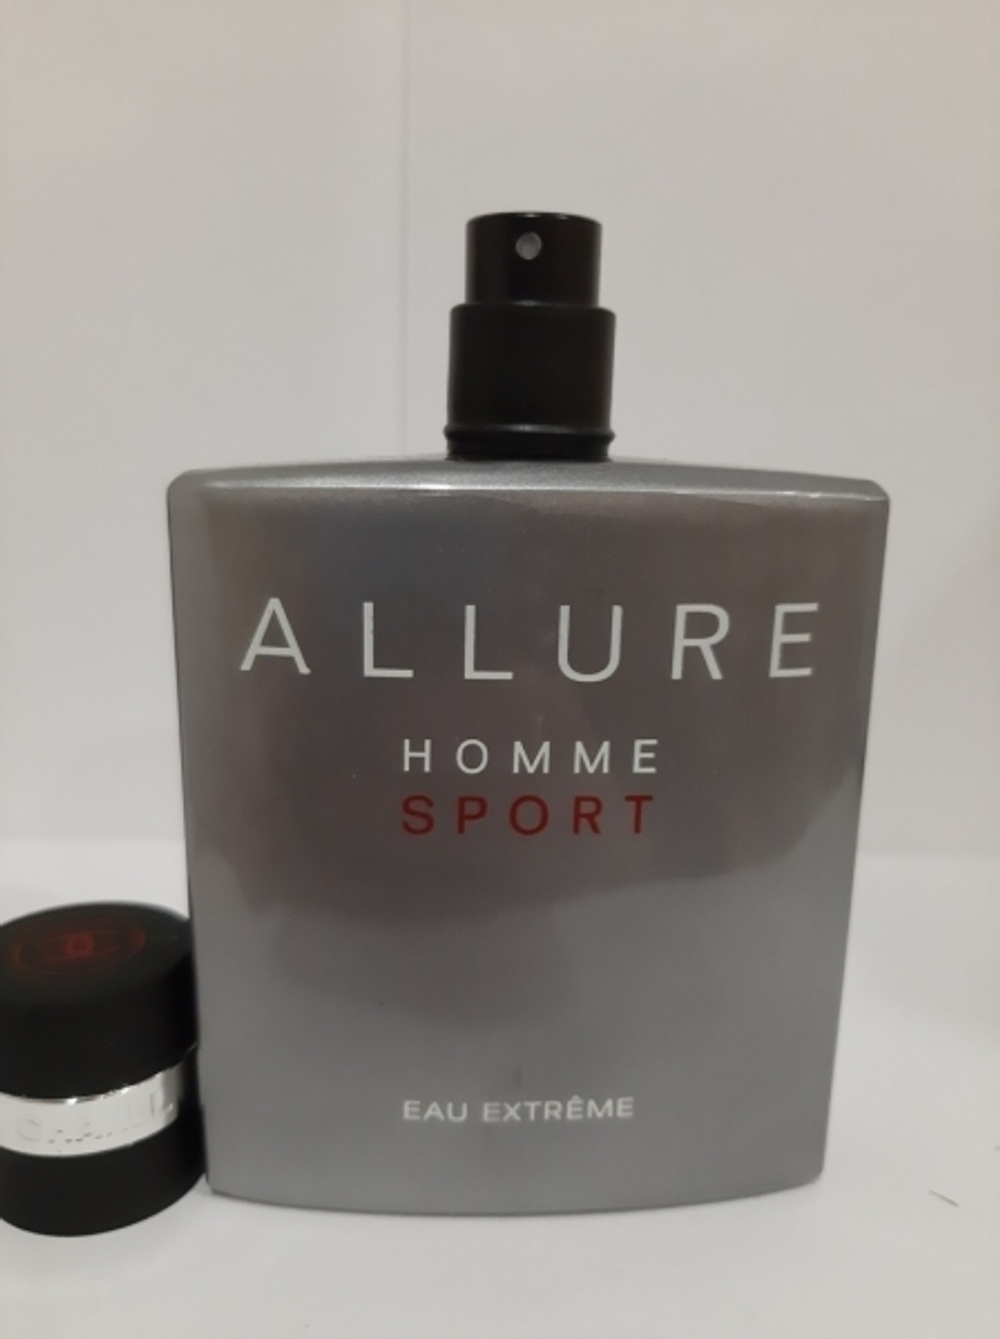 Chanel Allure Homme Sport Eau Extreme 100 ml (duty free парфюмерия)